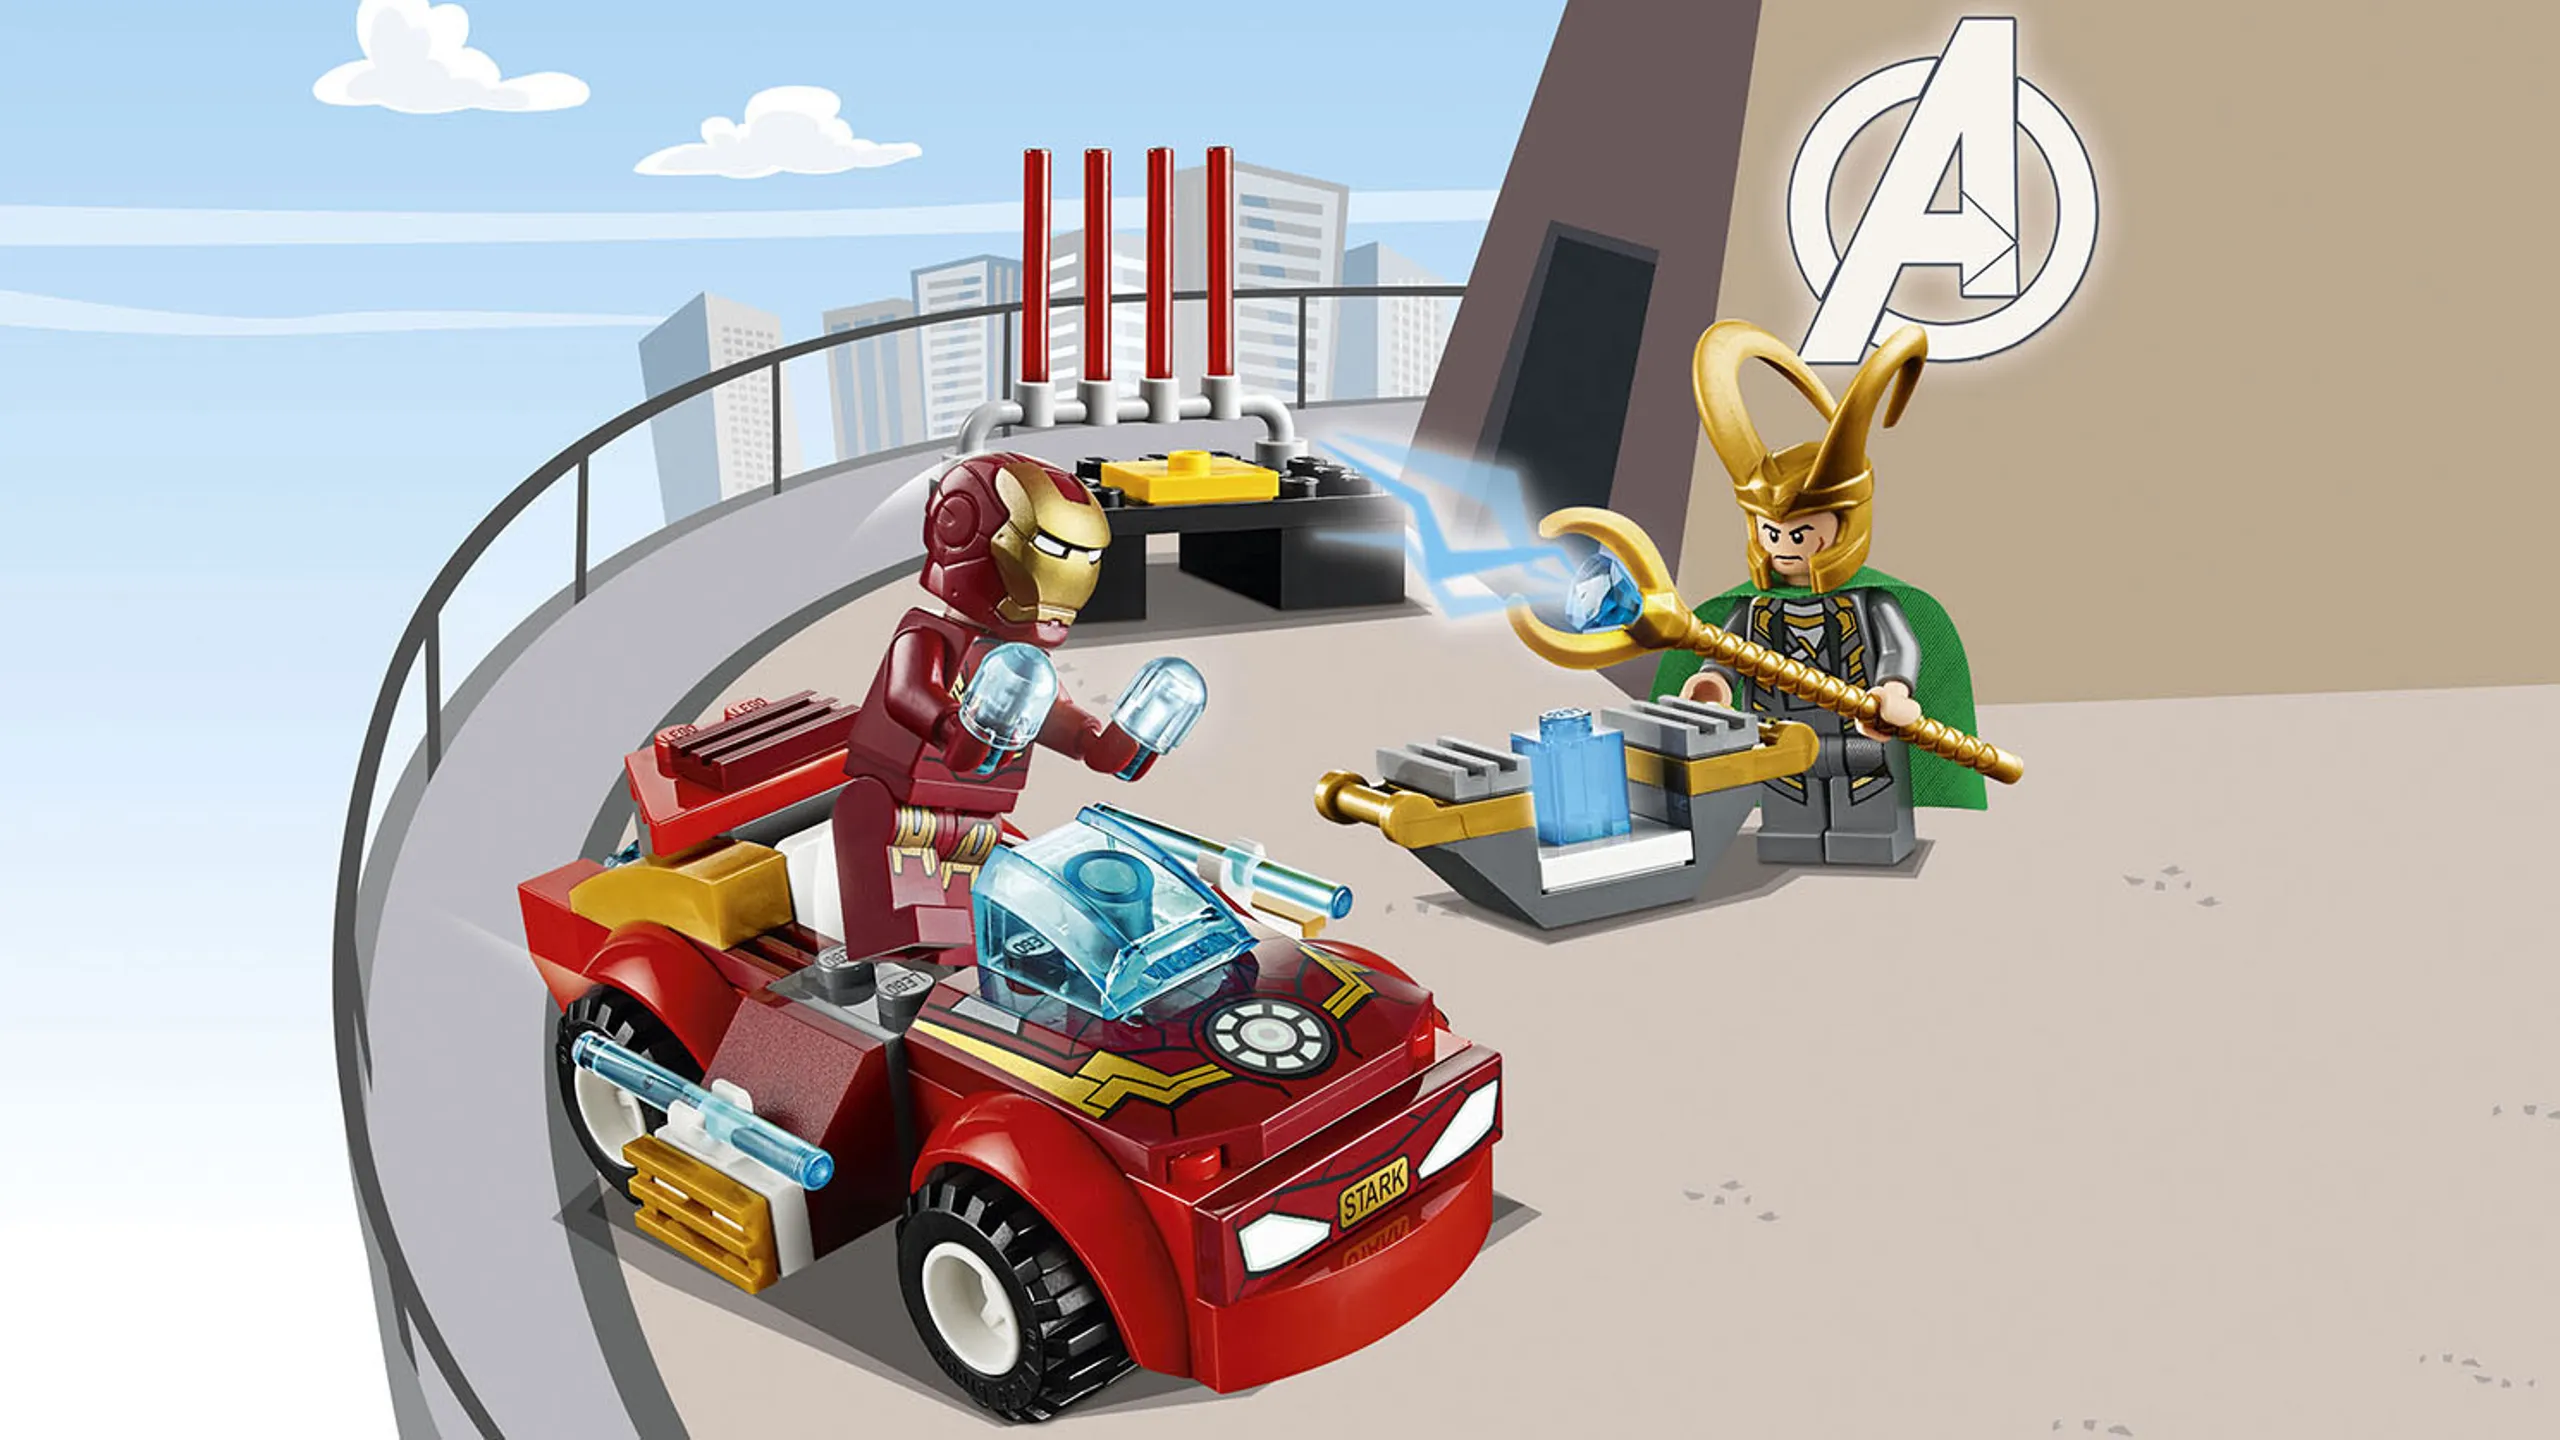 LEGO Super Heroes Sets: Marvel 76164 Iron Man Hulkbuster ver